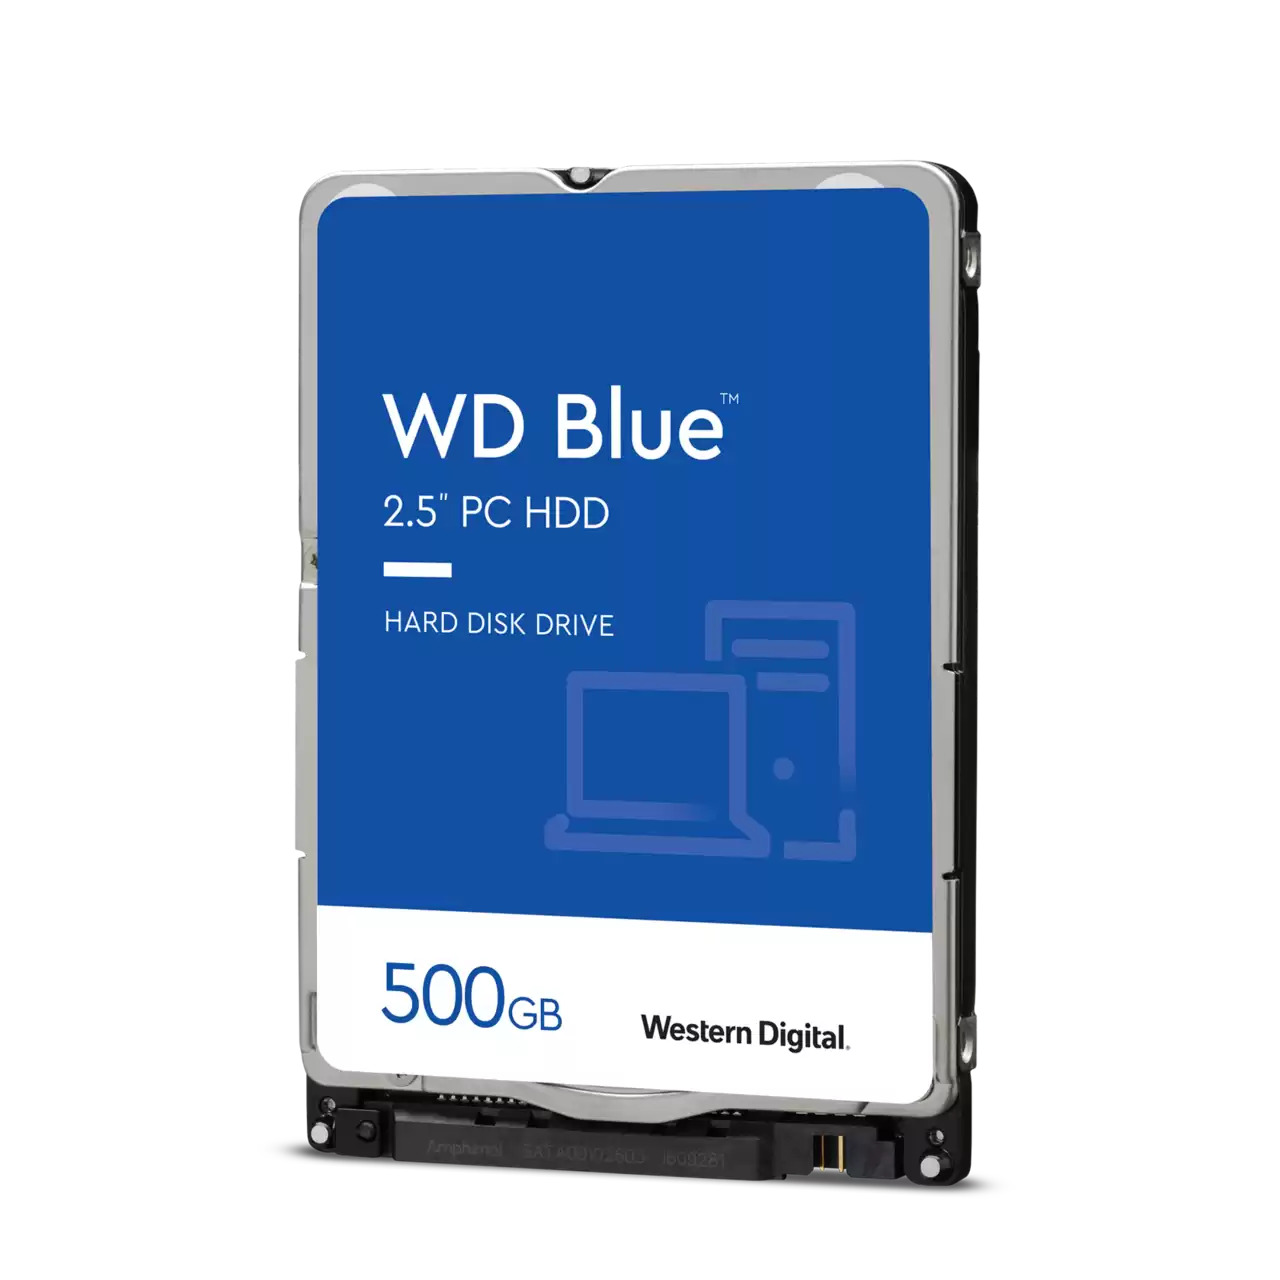 Hard disk desktop Western Digital wd blue 500gb 5400rpm 2.5 sata iii